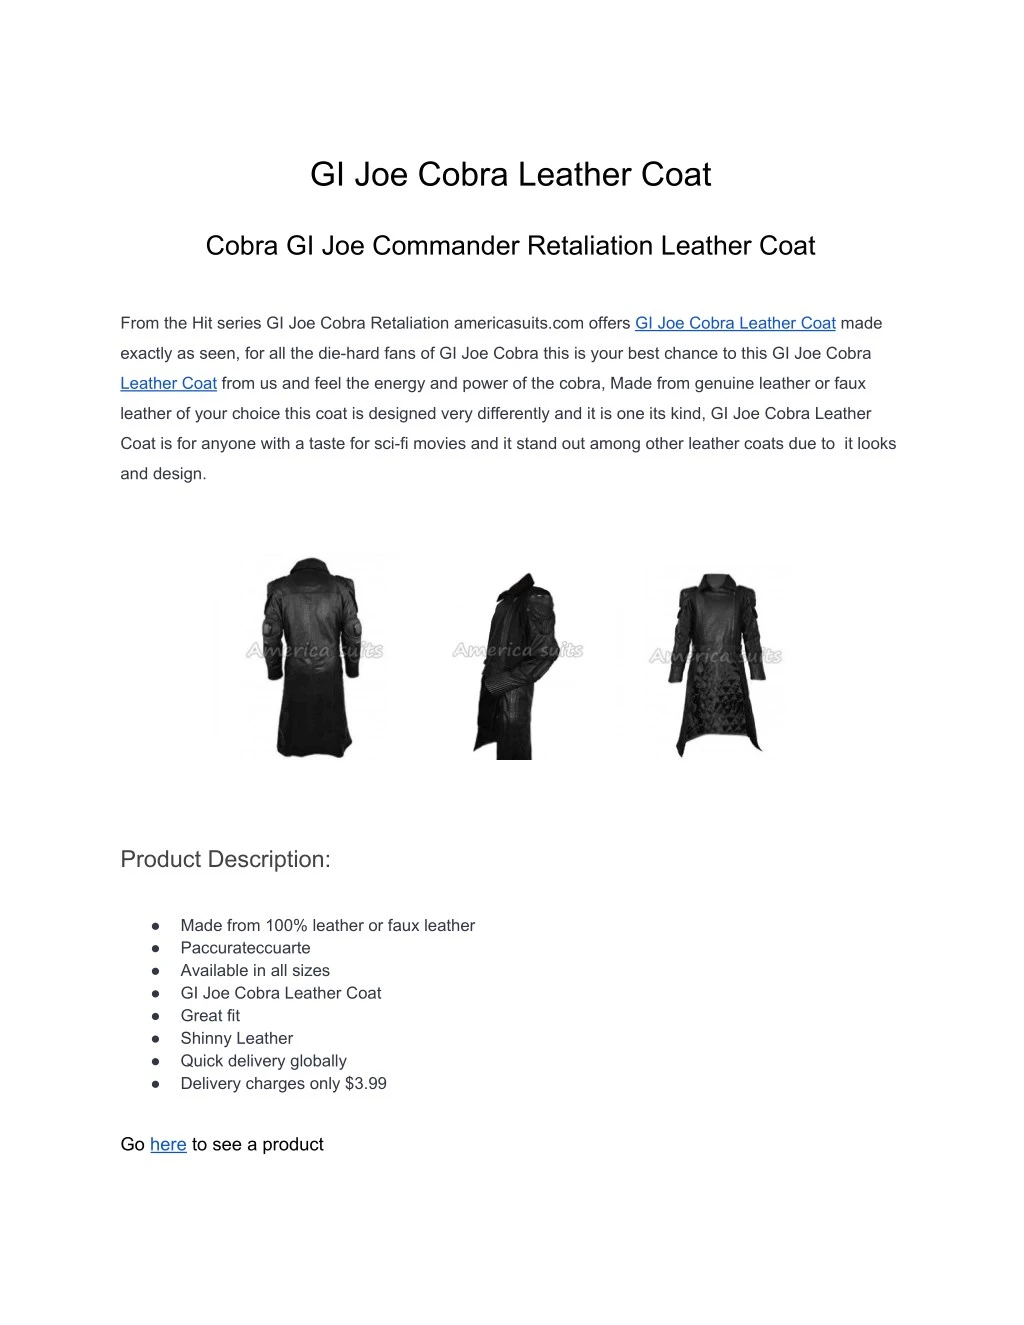 gi joe cobra leather coat